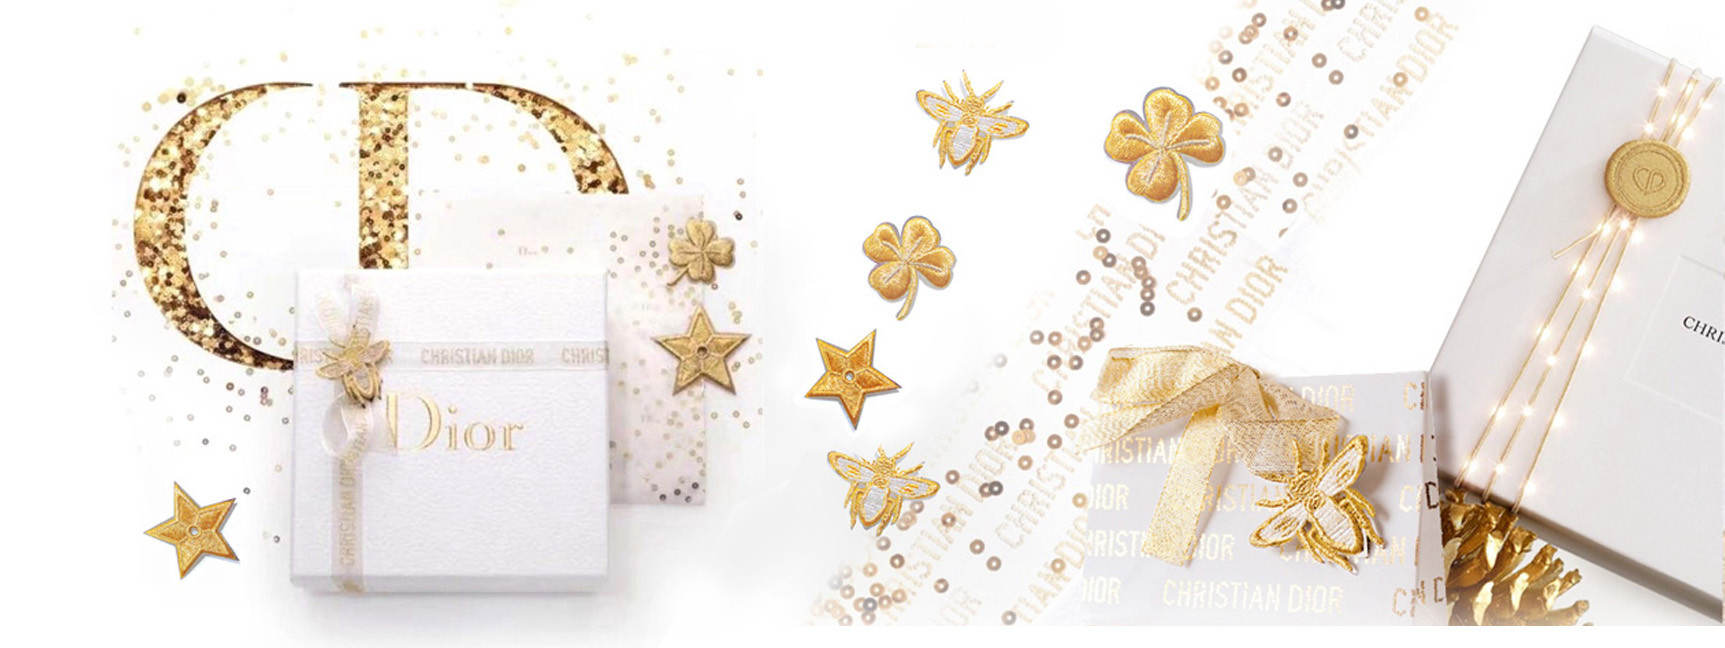 Homepage - Tech Design Ltd.  Maison Christian Dior Xmas Mcd Advent Calendar Offer